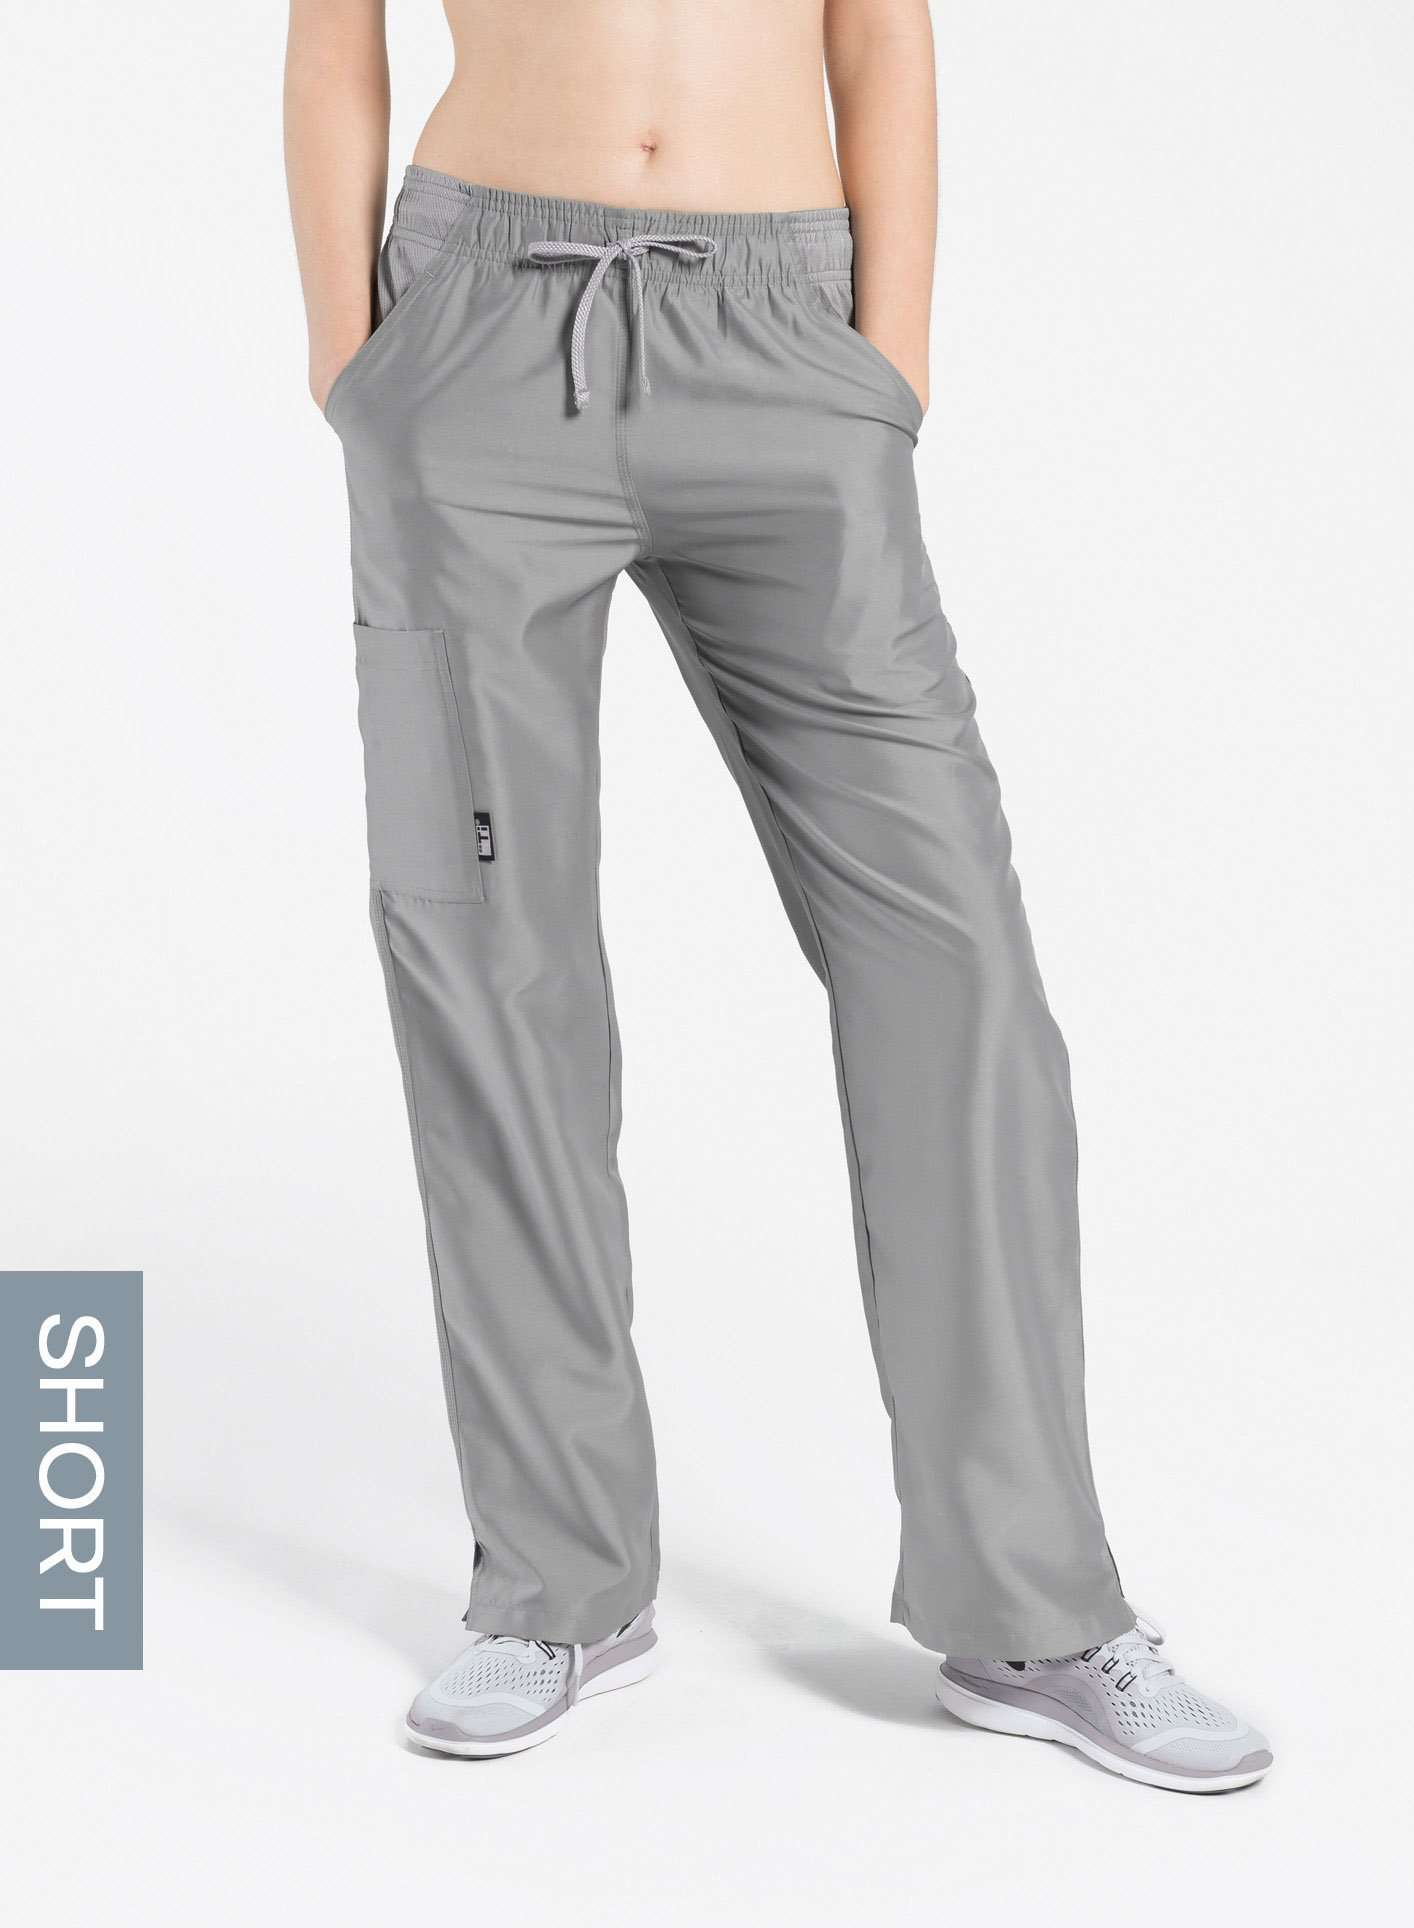 womens short cargo pocket straight leg scrub pants light gray Elements front